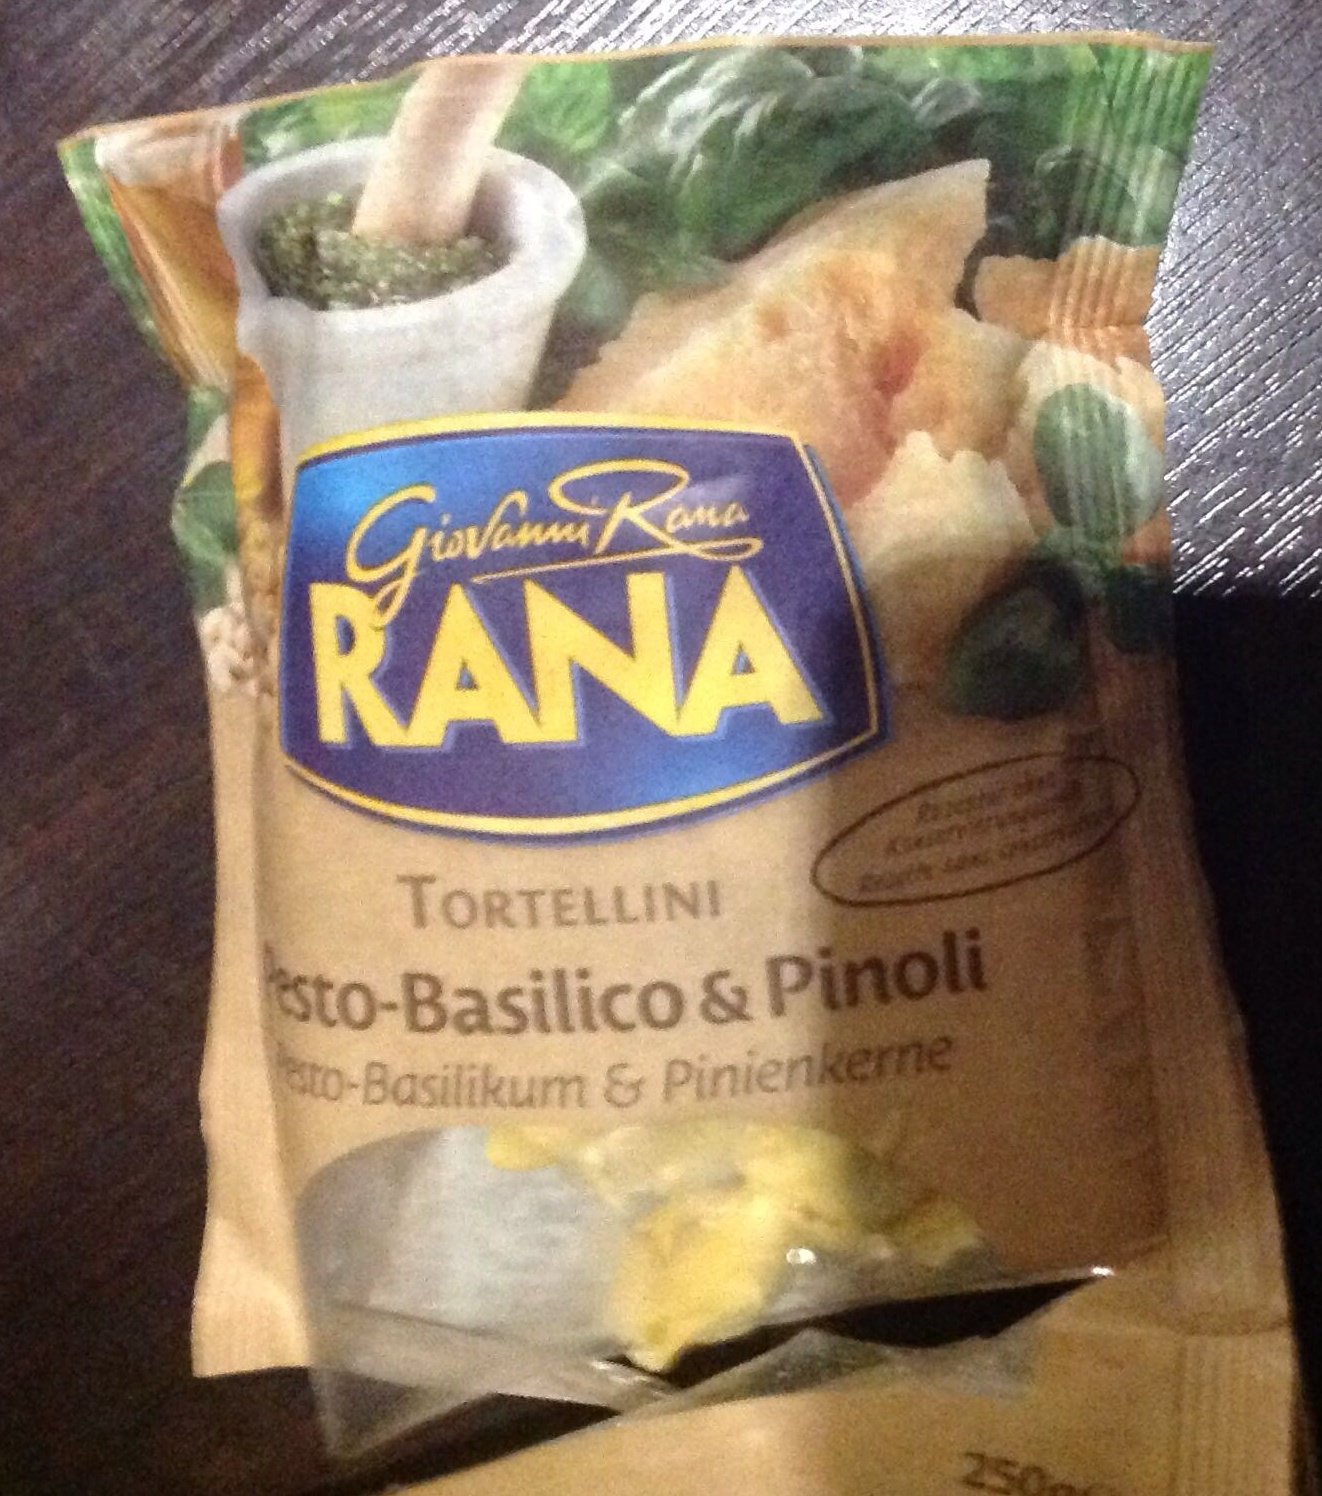 Rana - Tortellini Pesto-Basilico & Pinoli - Product - fr